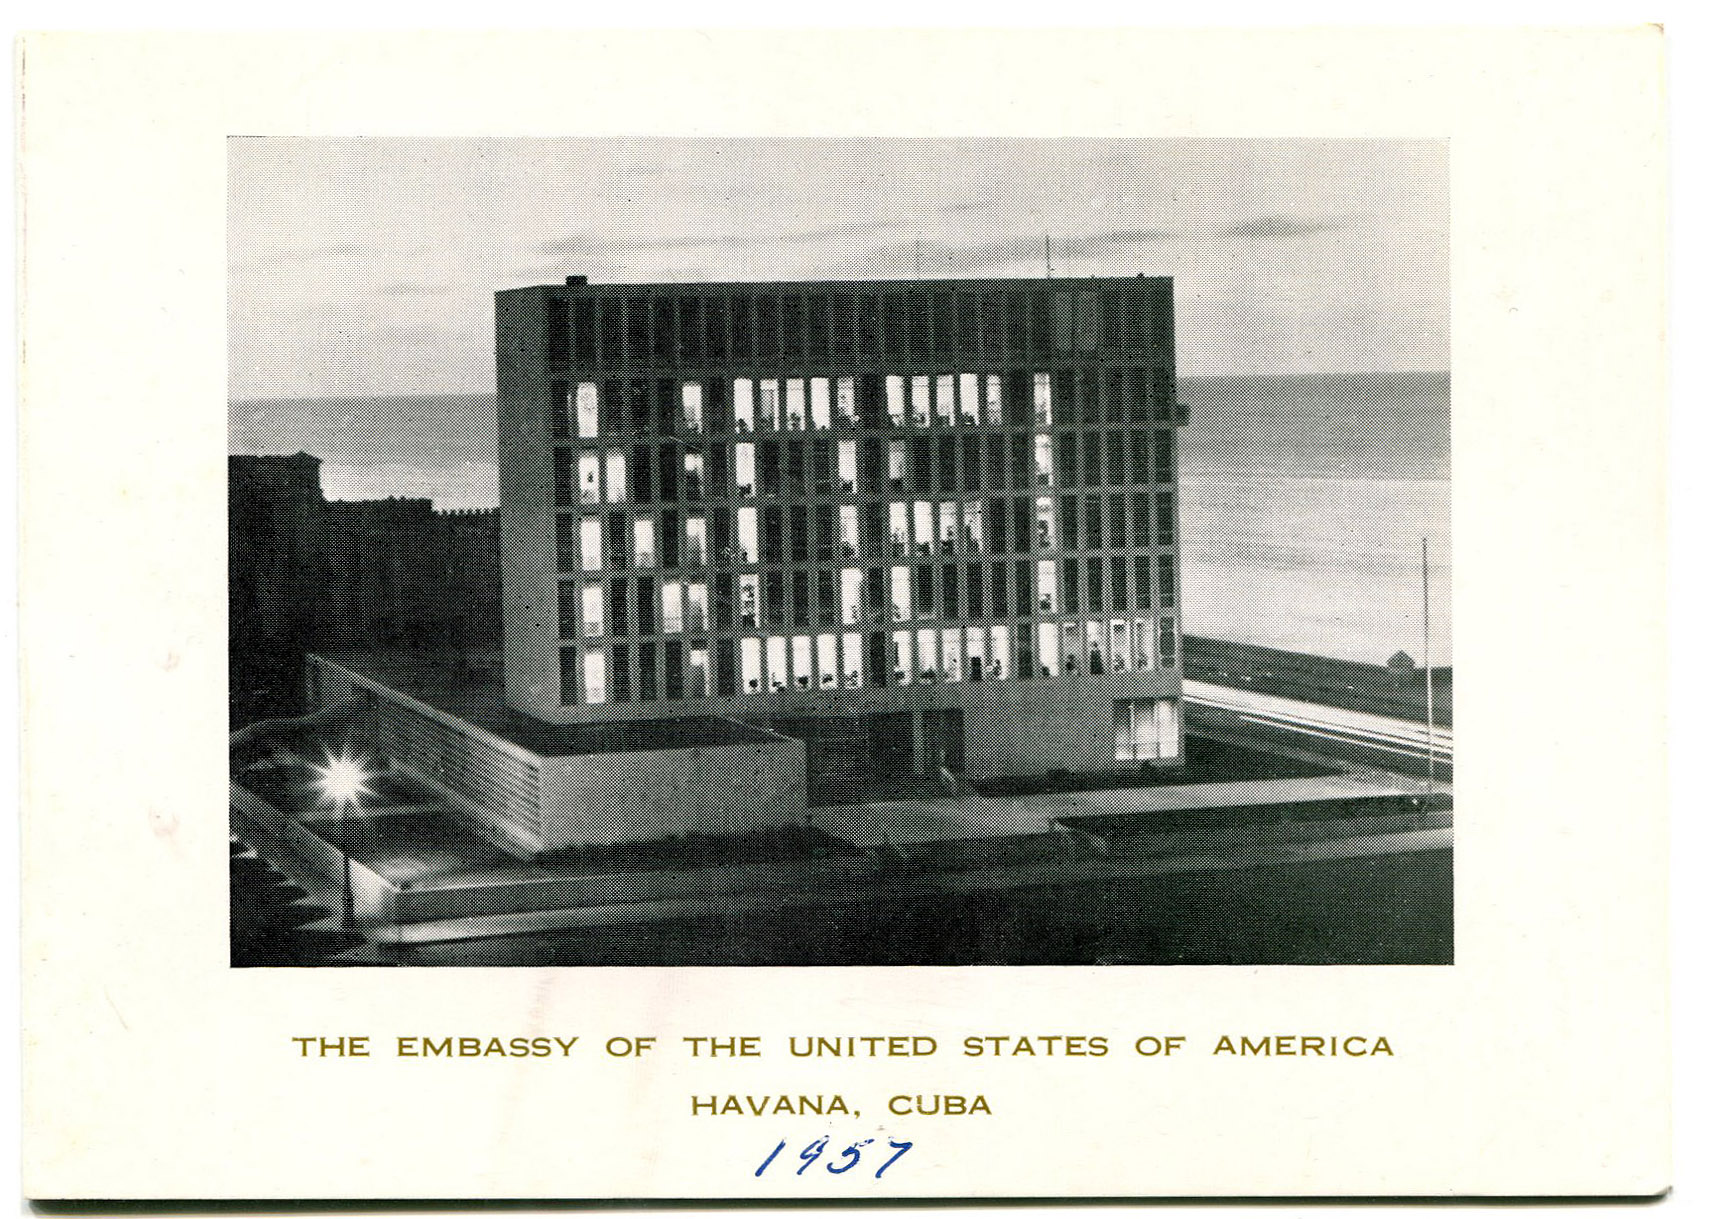 United States Embassy, 1957